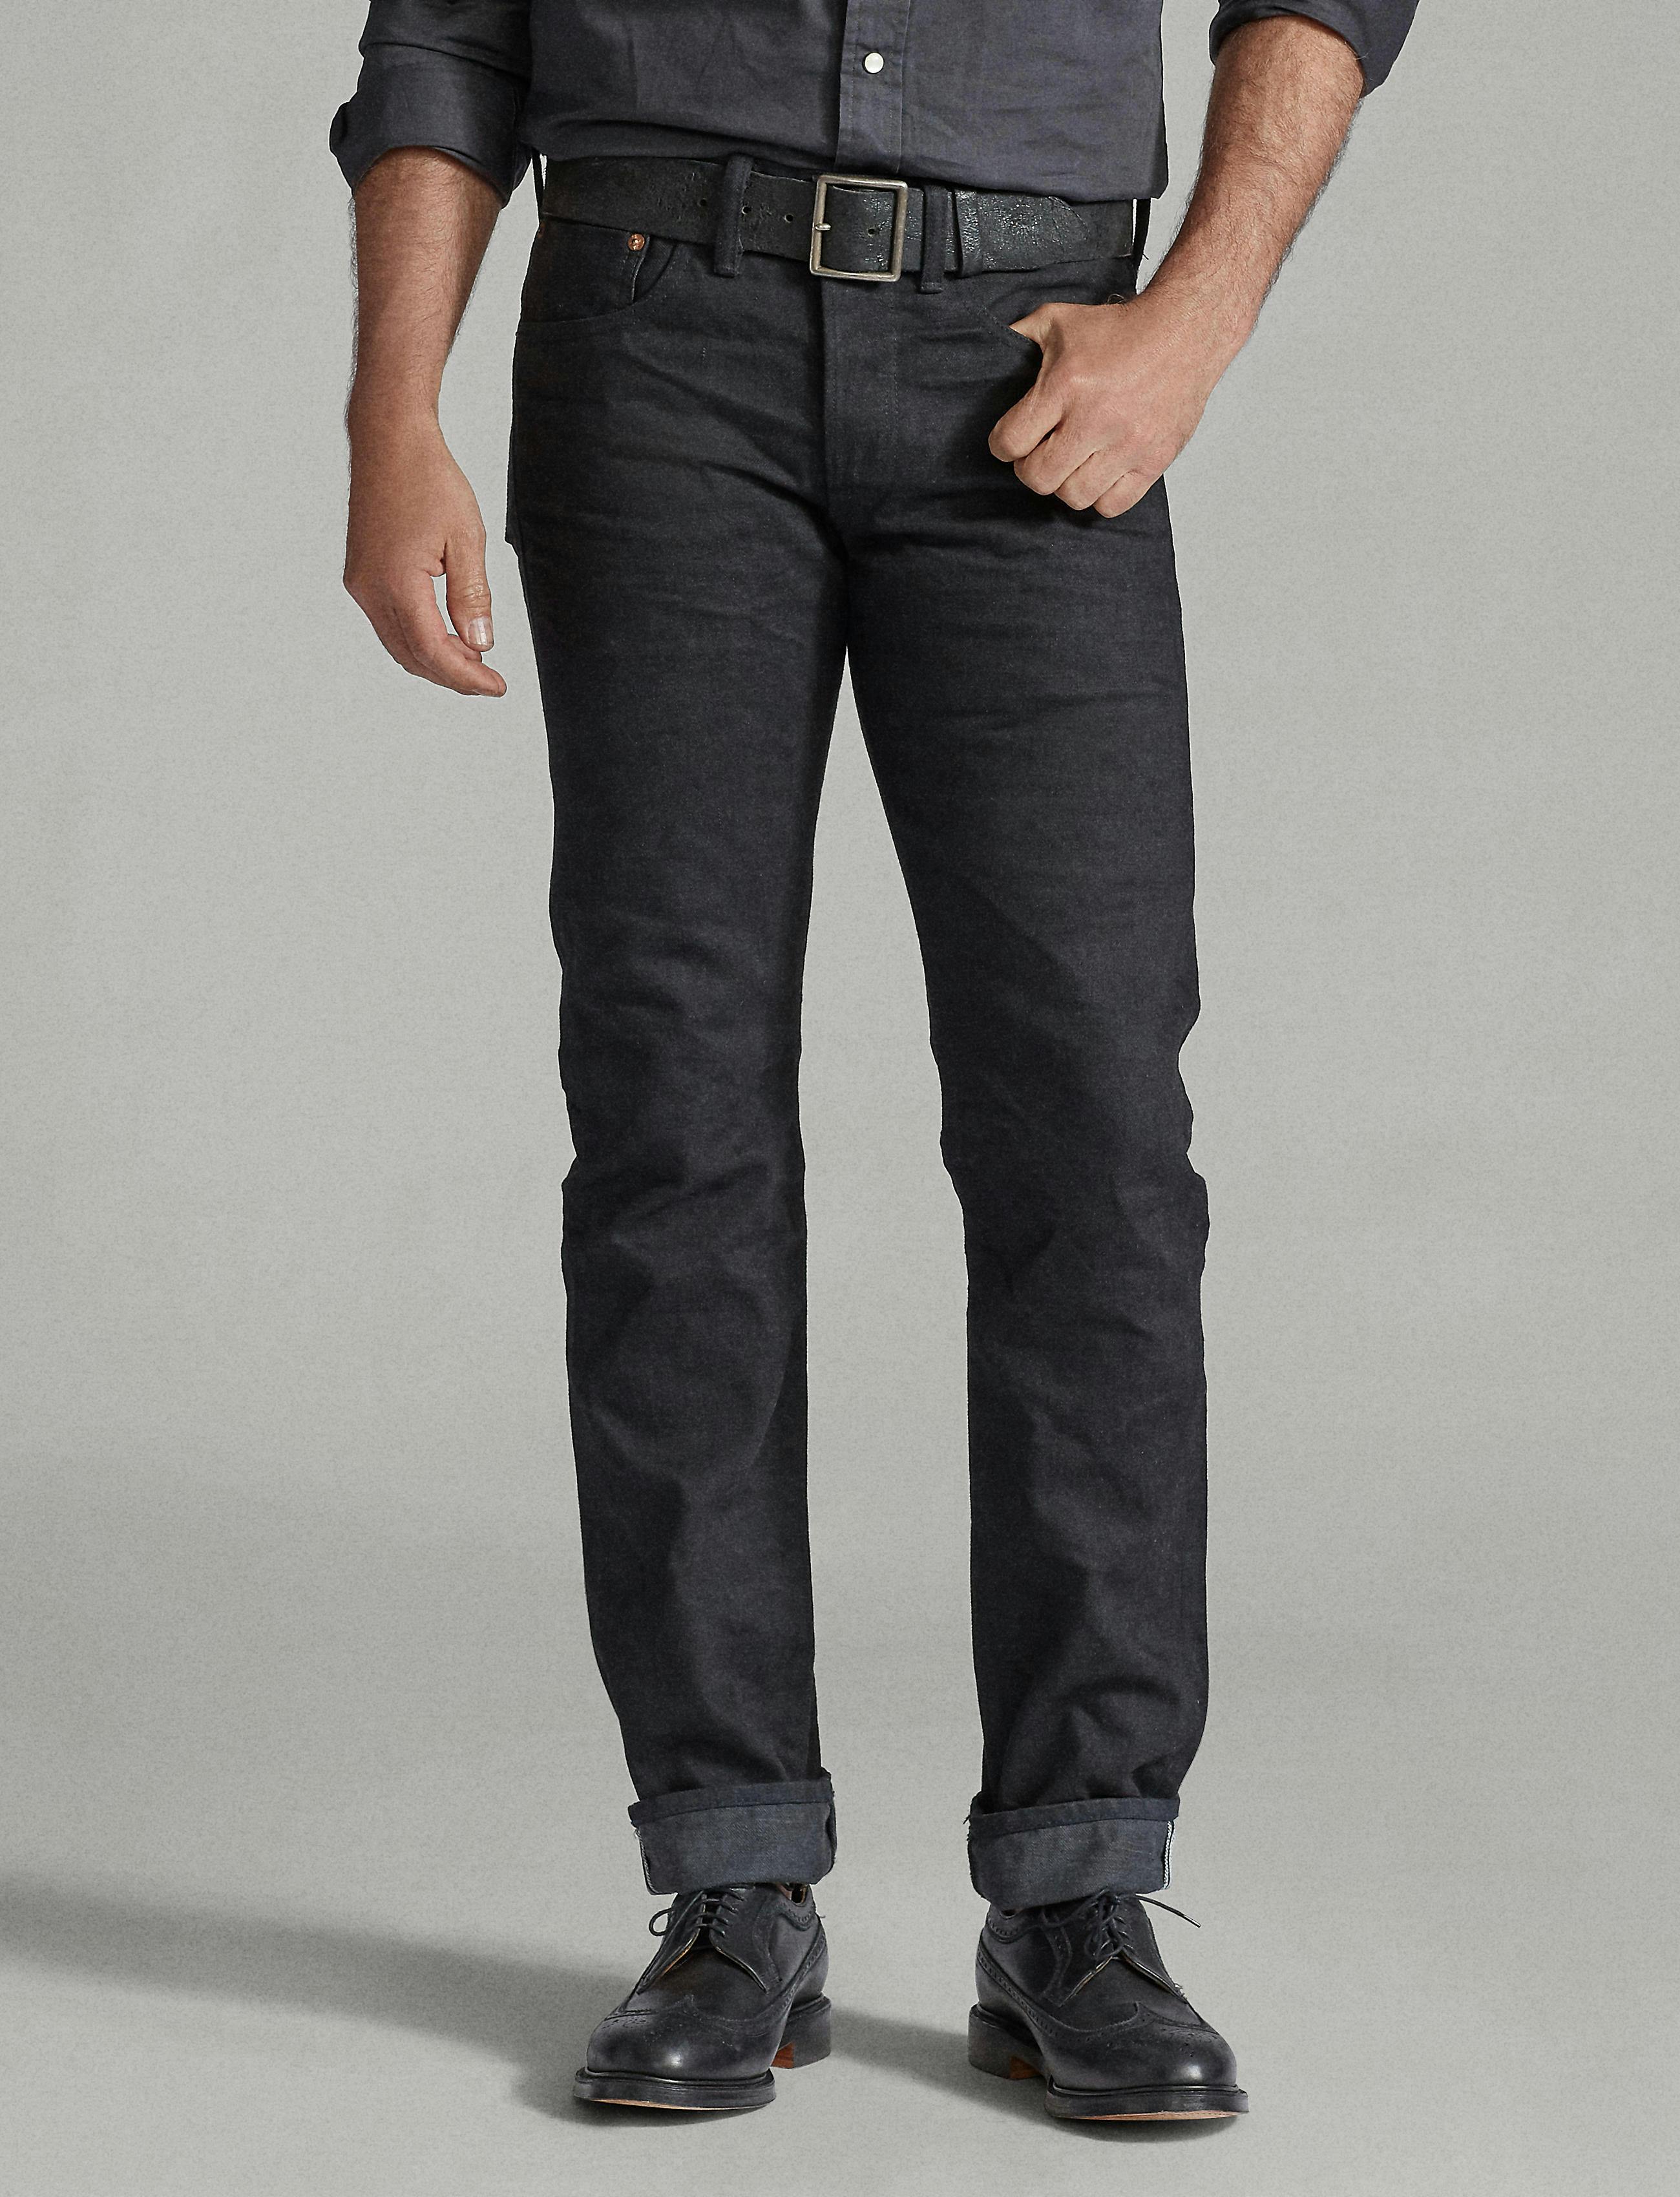 RRL Slim Fit Selvedge Denim Jeans - Black on Black, Jeans